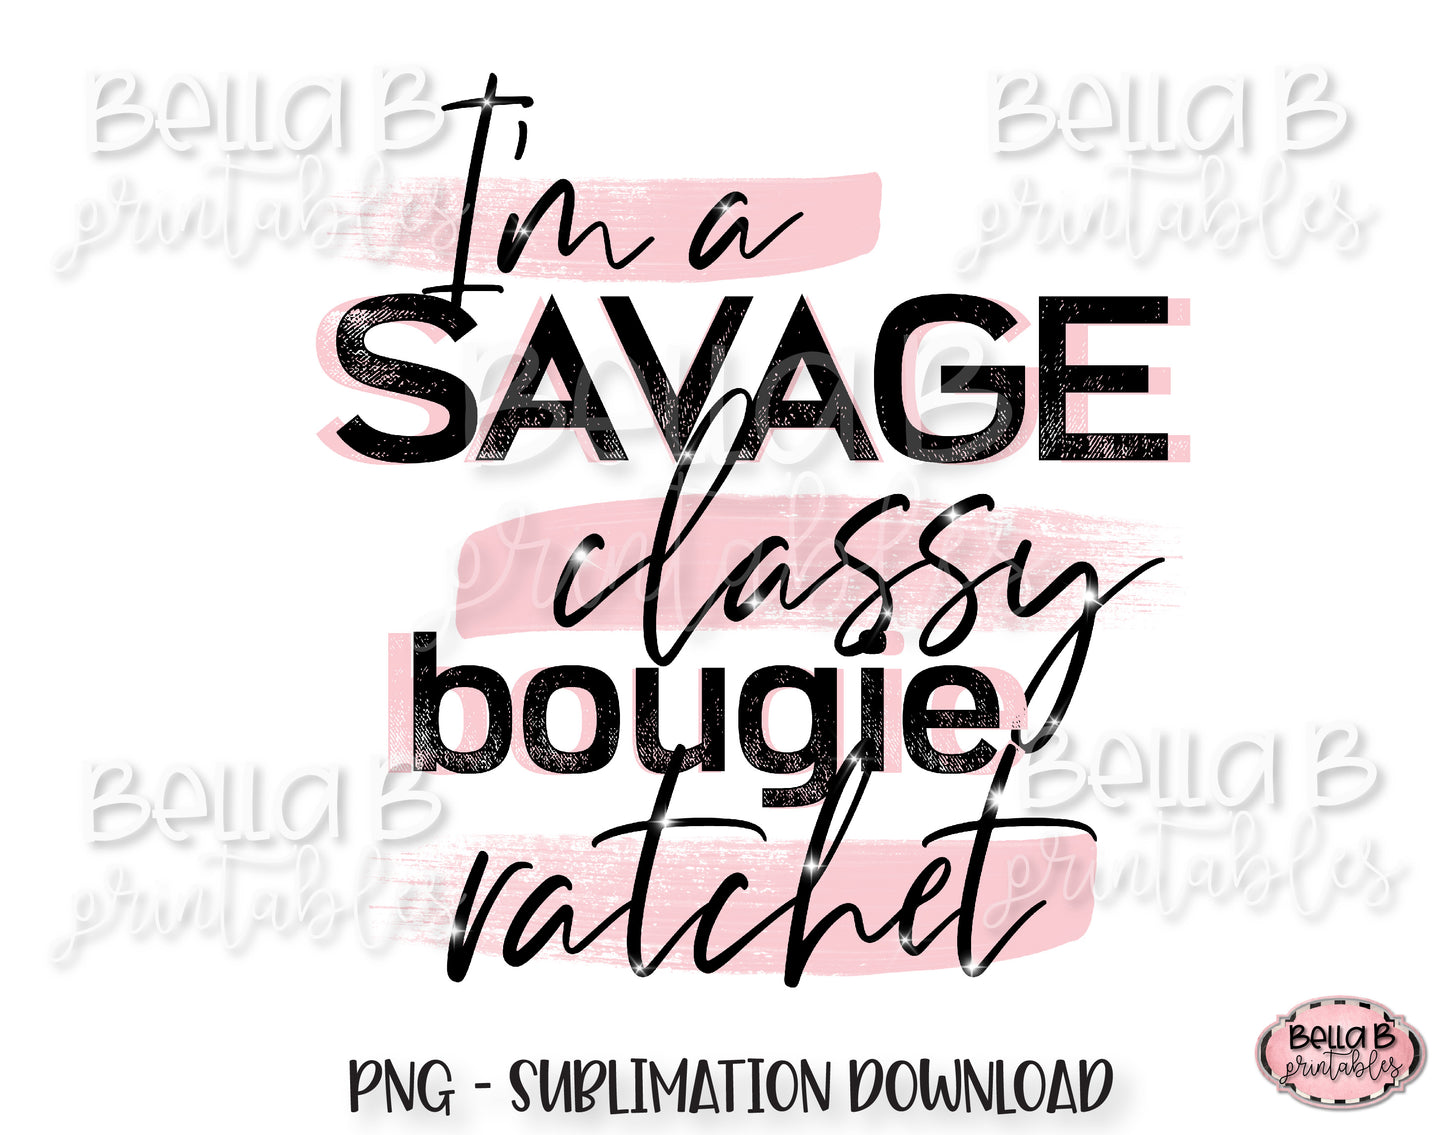 I'm a Savage Sublimation Design, Classy Bougie Ratchet